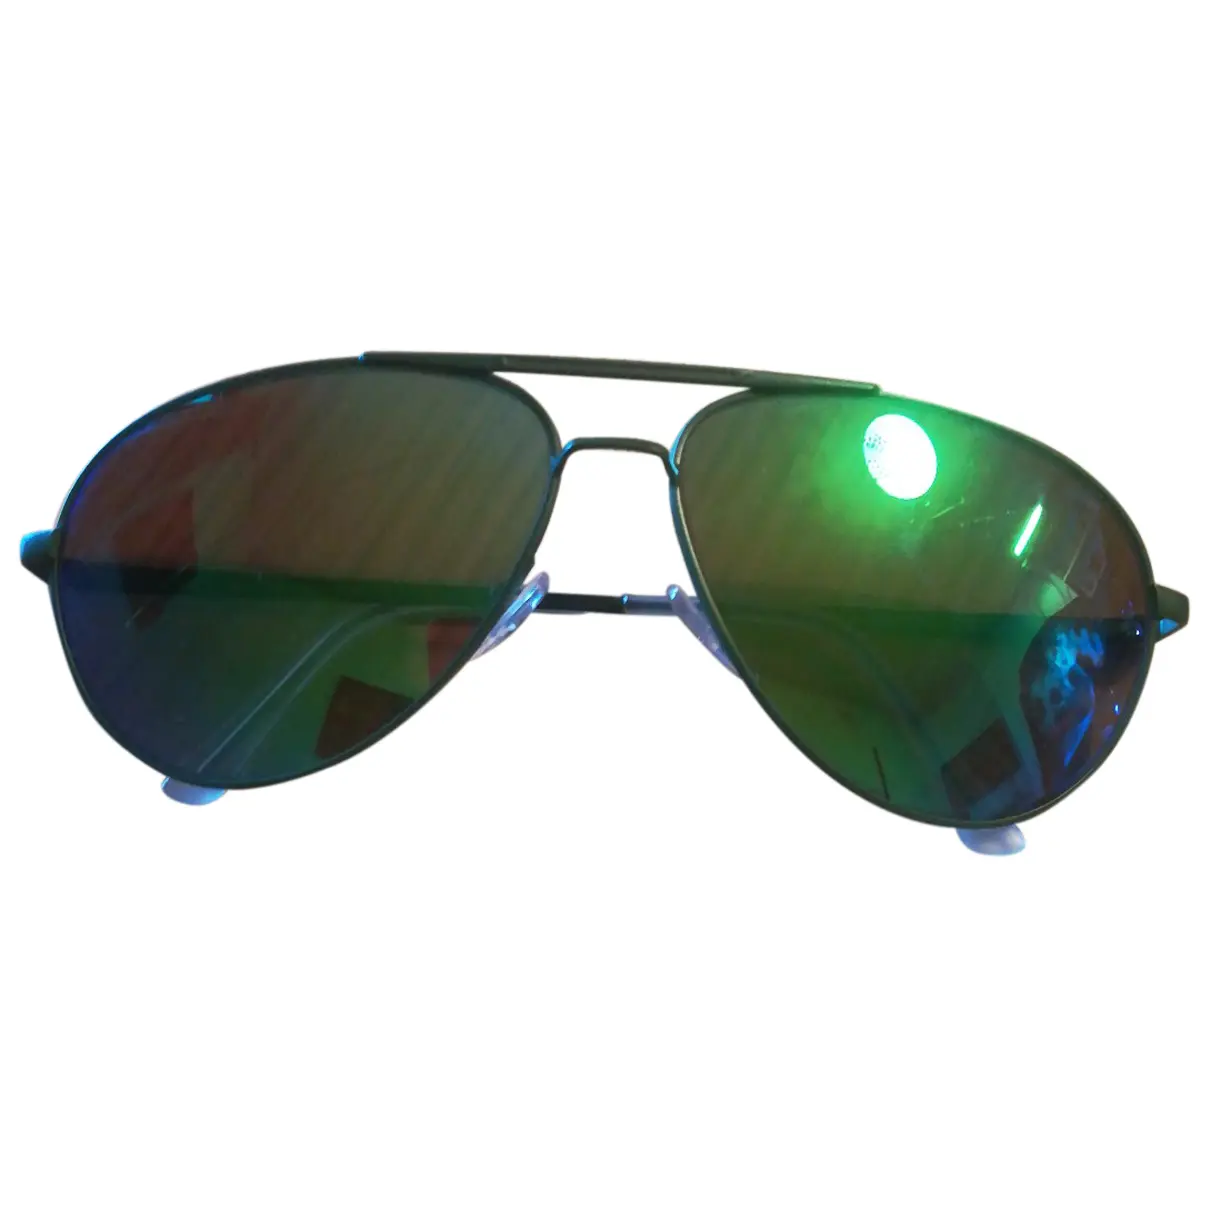 Aviator sunglasses Byblos